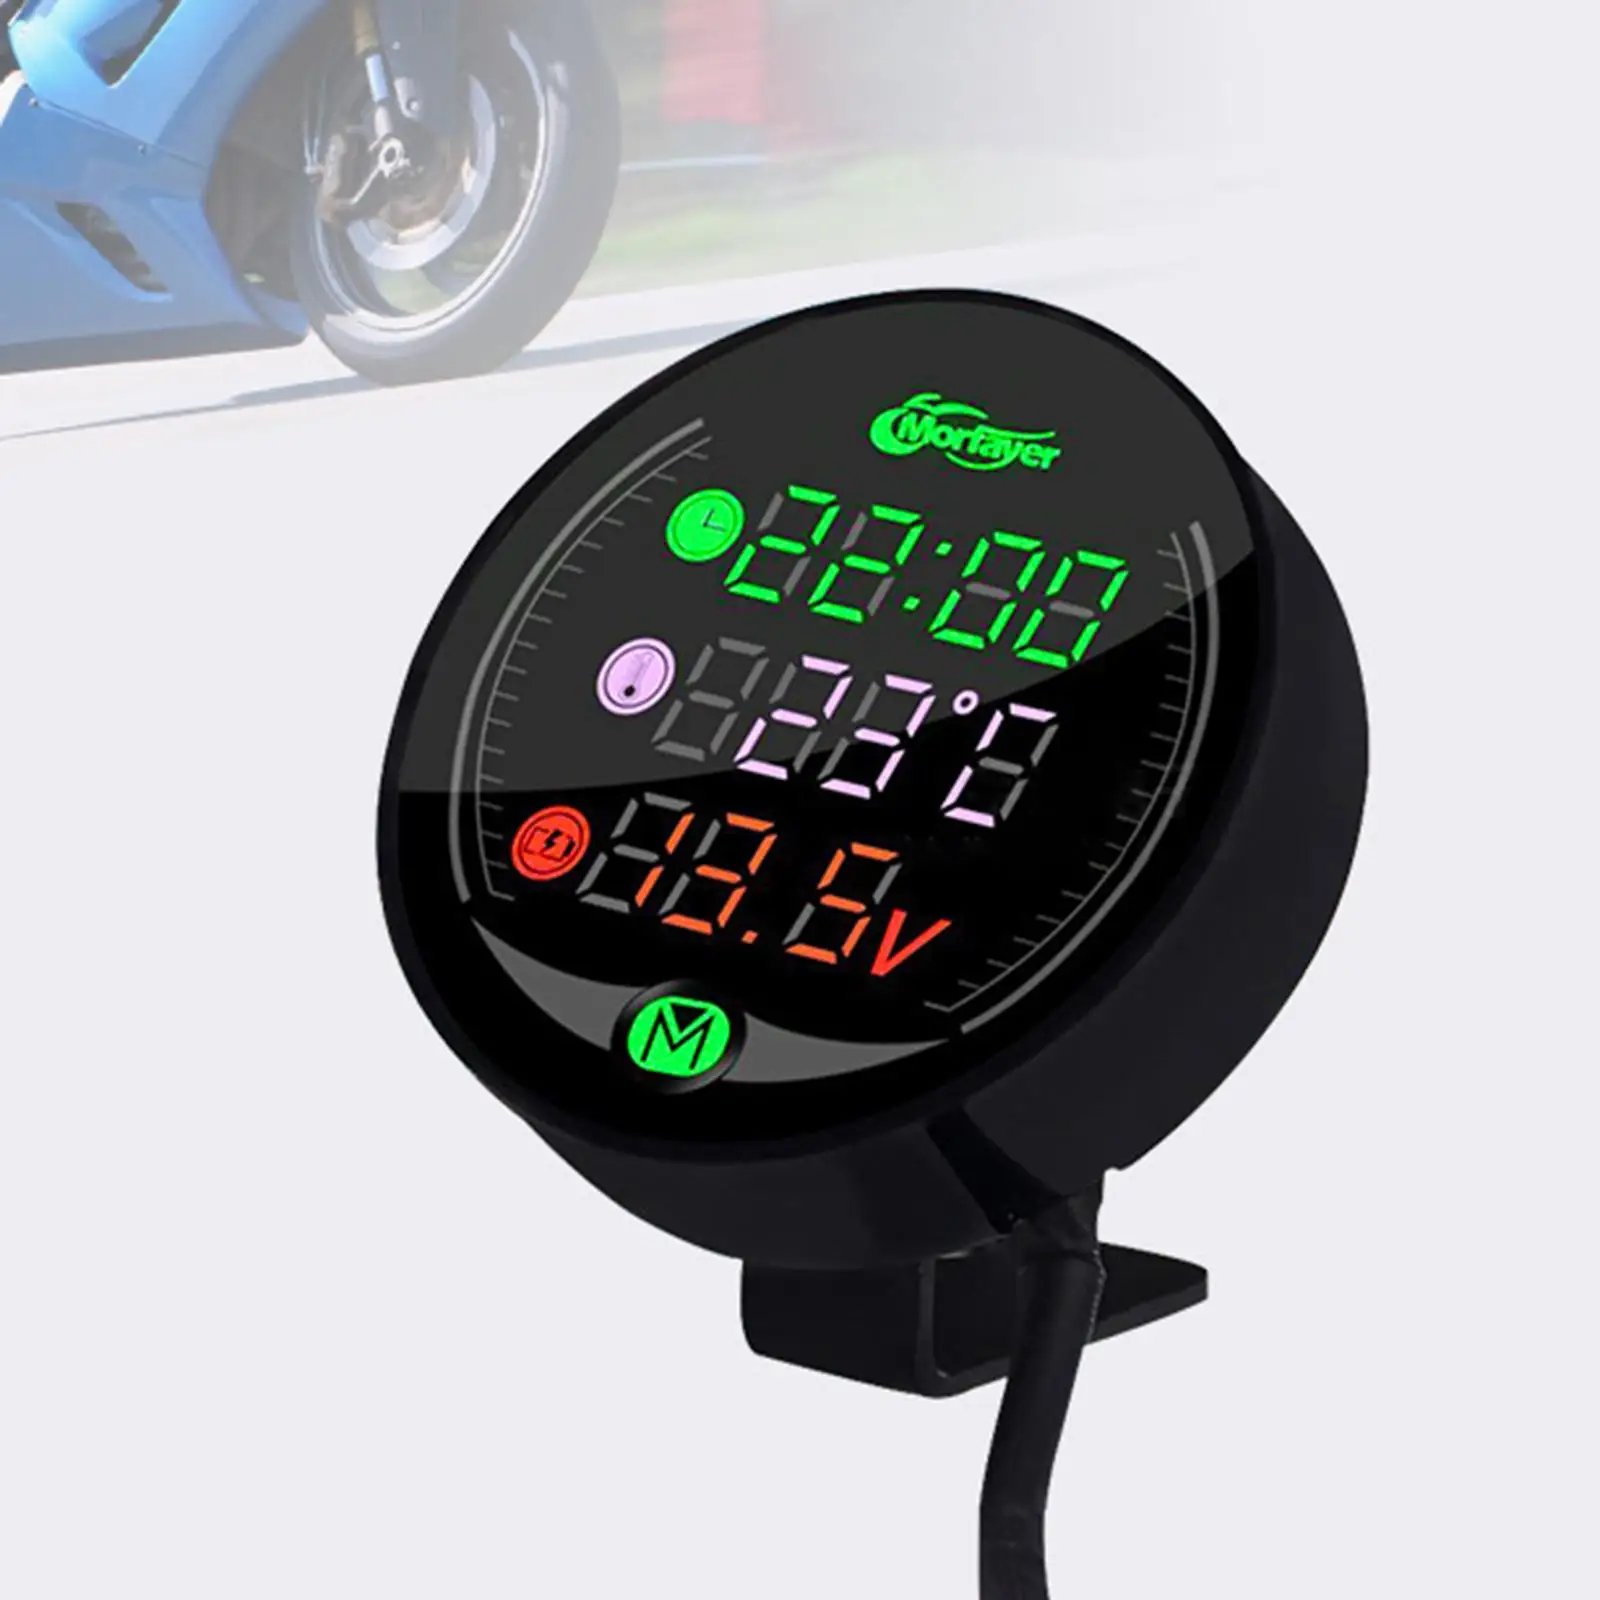 Motorbike  Motorcycle Meter Voltmeter Temperature Monitor Volt